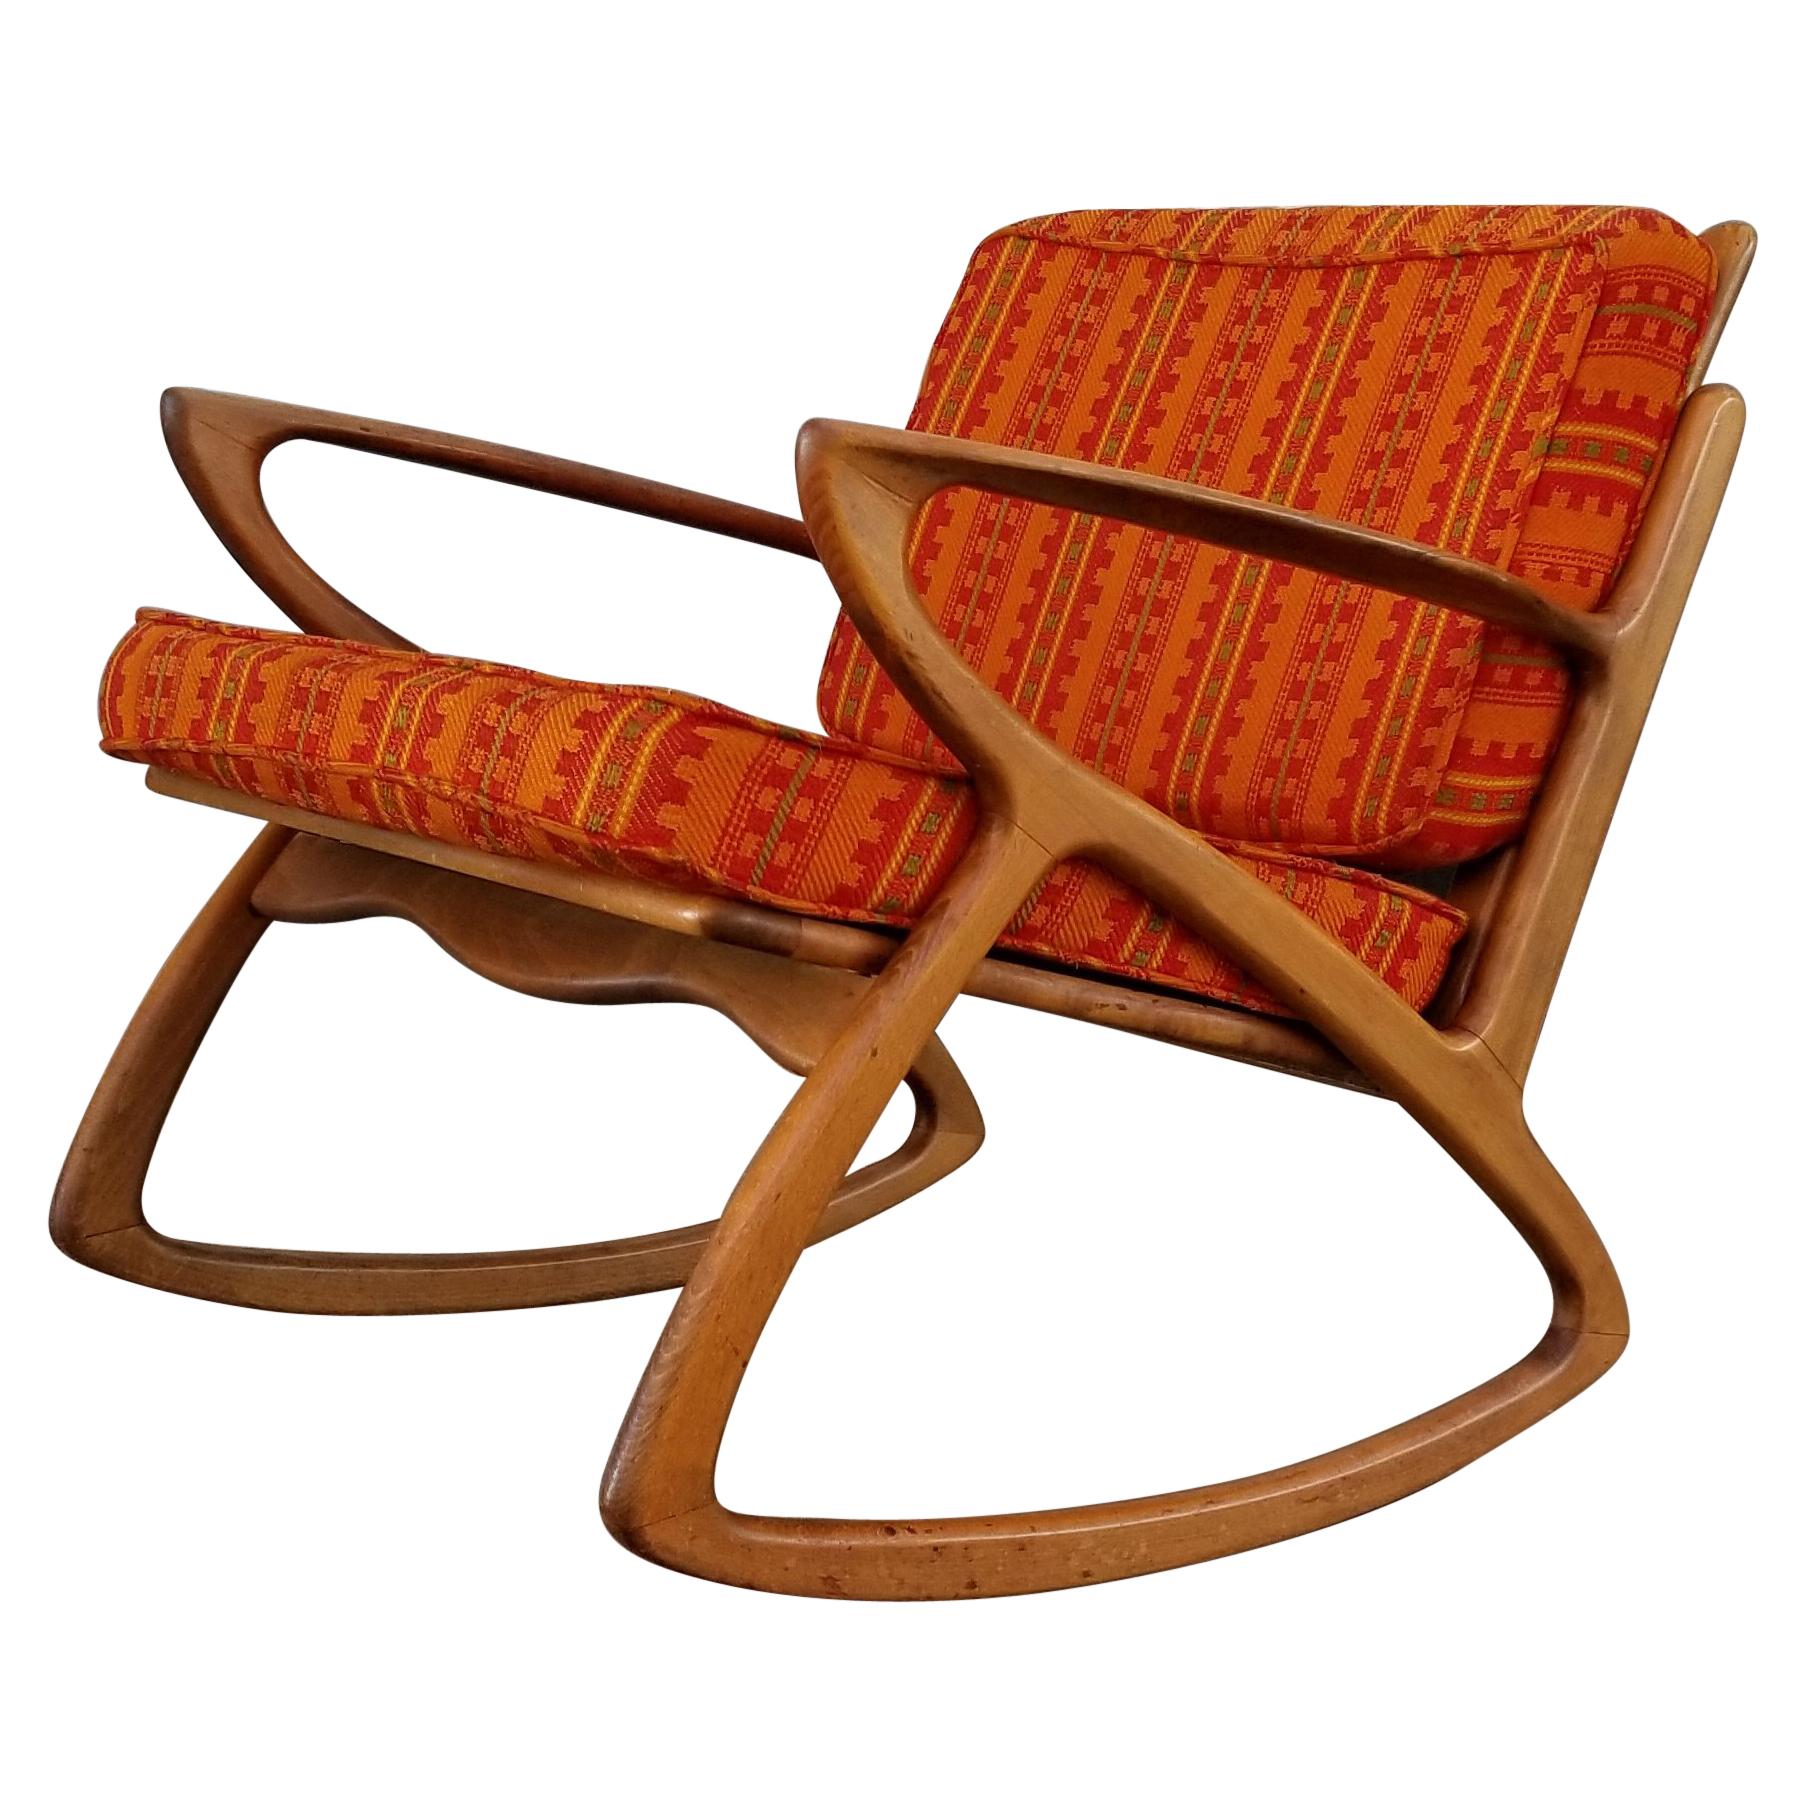 Danish Modern Style "Z" Rocking Chair, 1950s